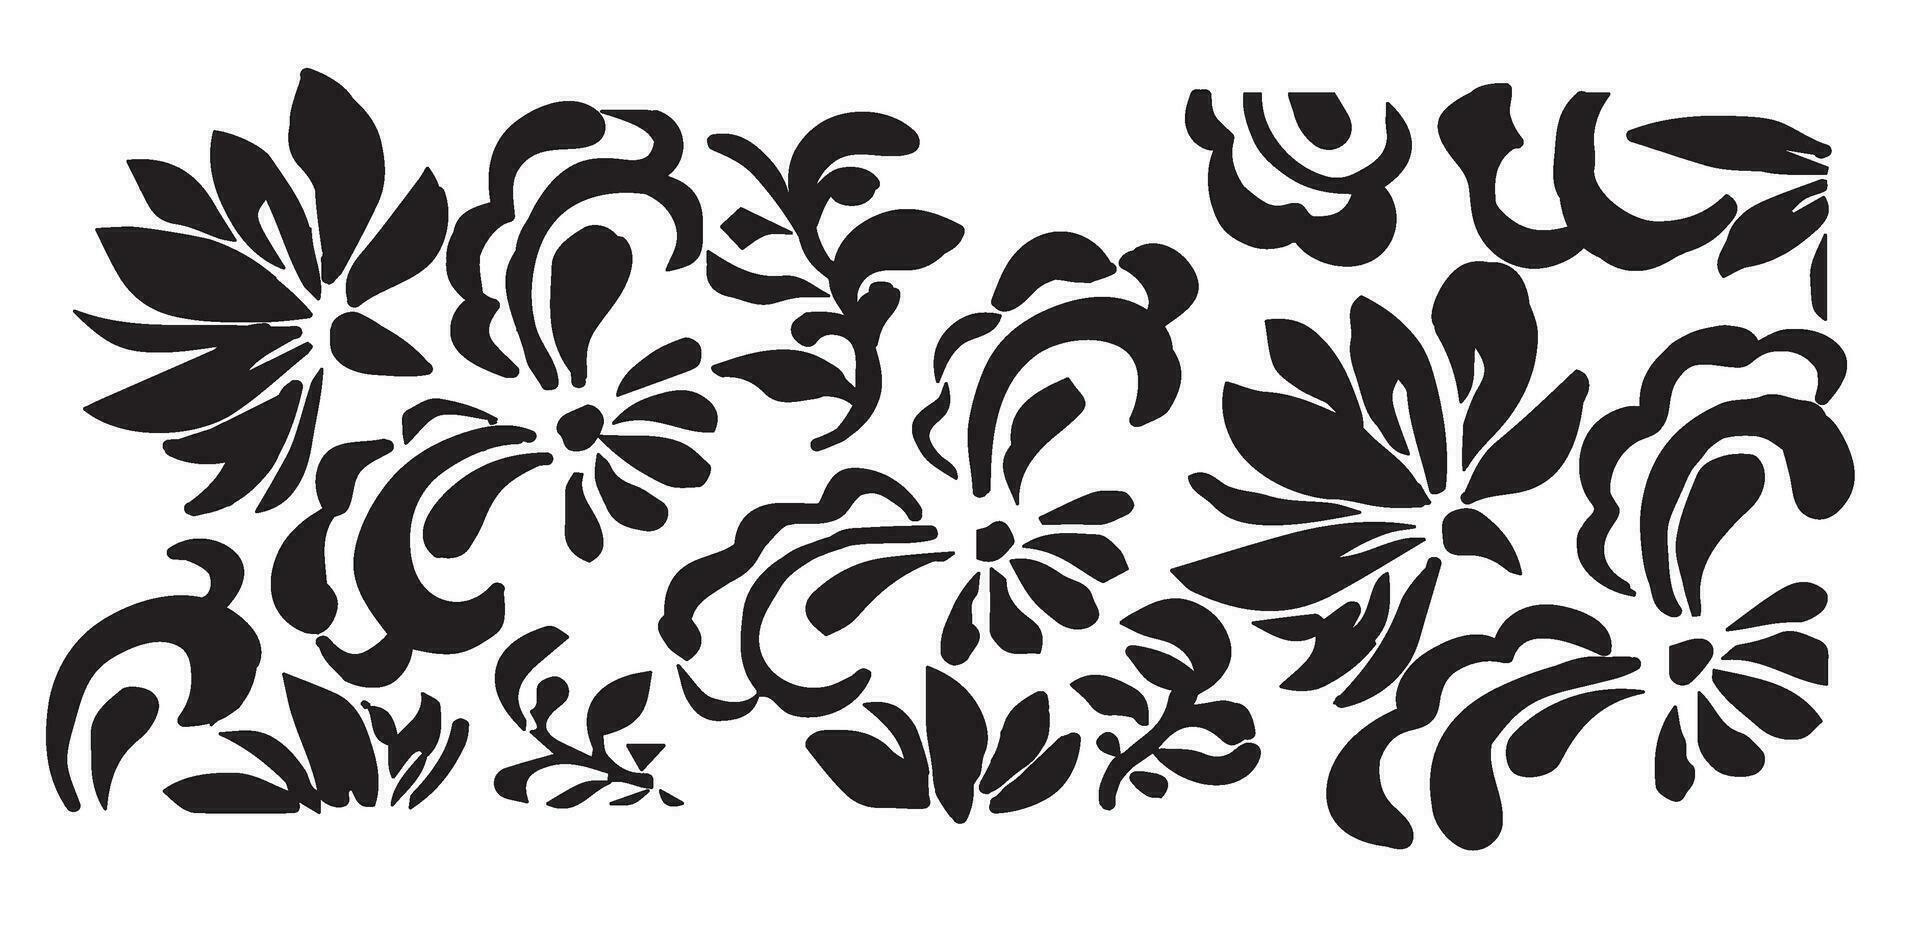 vinil ilustração cortar Fora floral abstrato vetor